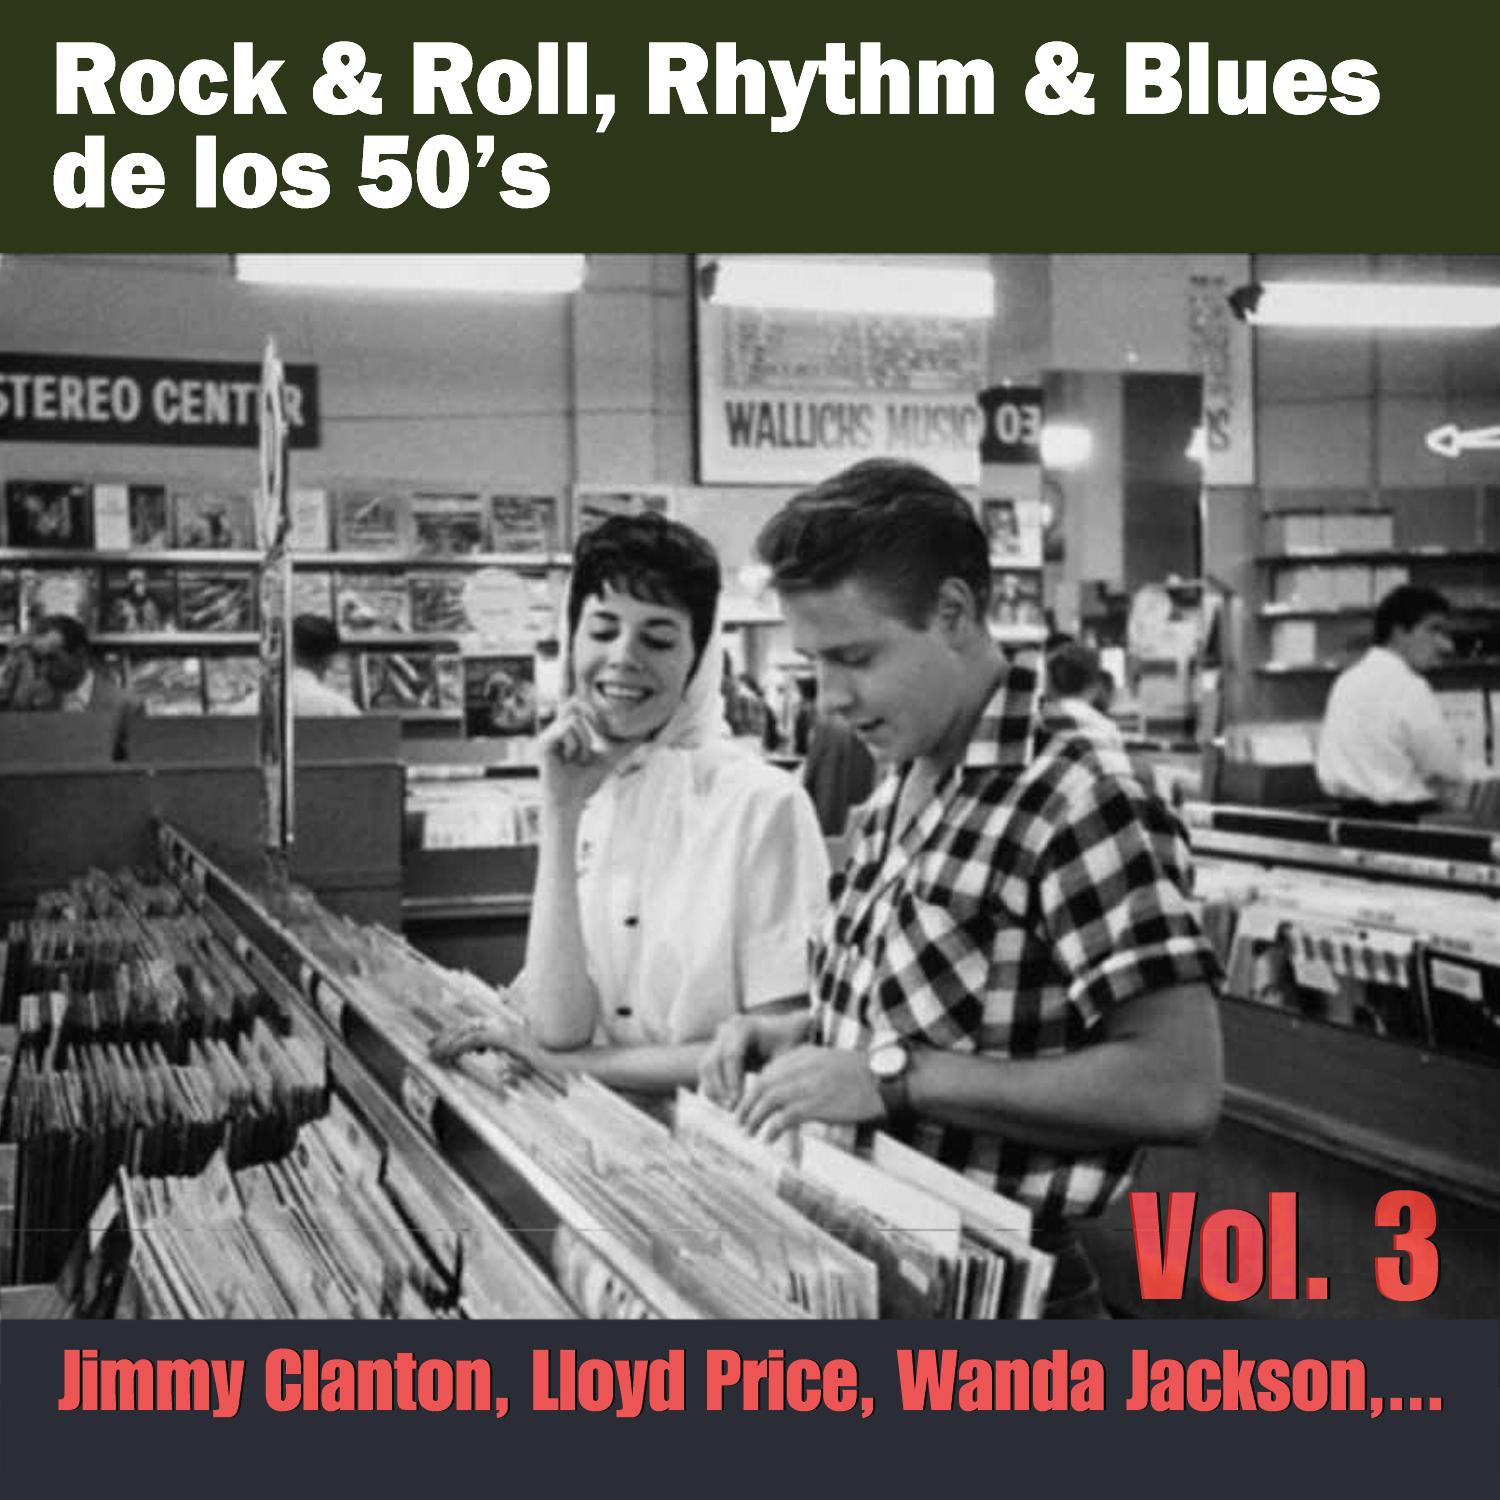 Rock & Roll, Rhythm & Blues de los 50's Vol. 3